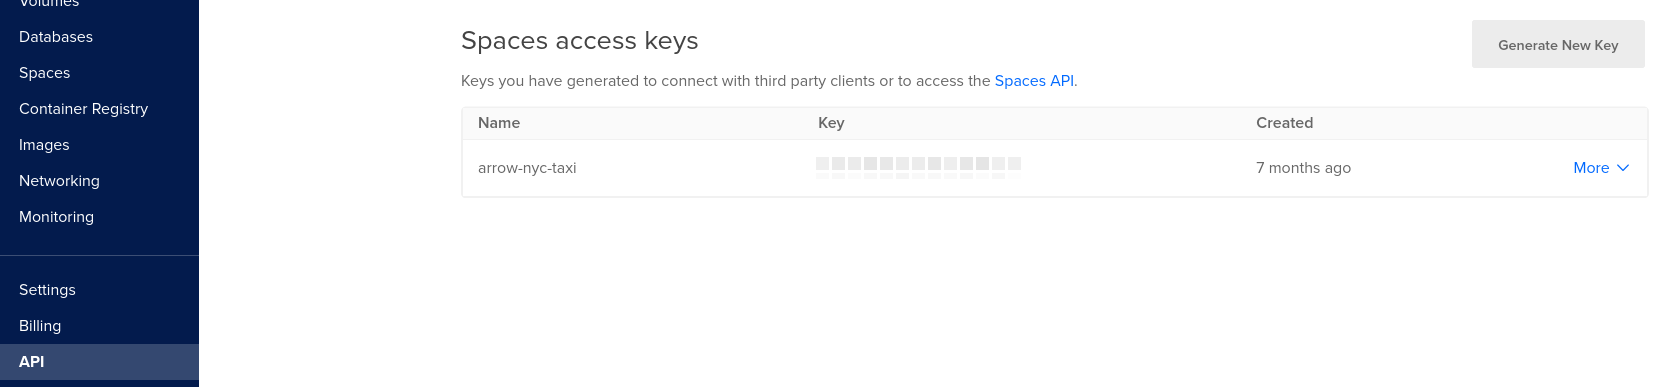 Spaces access keys